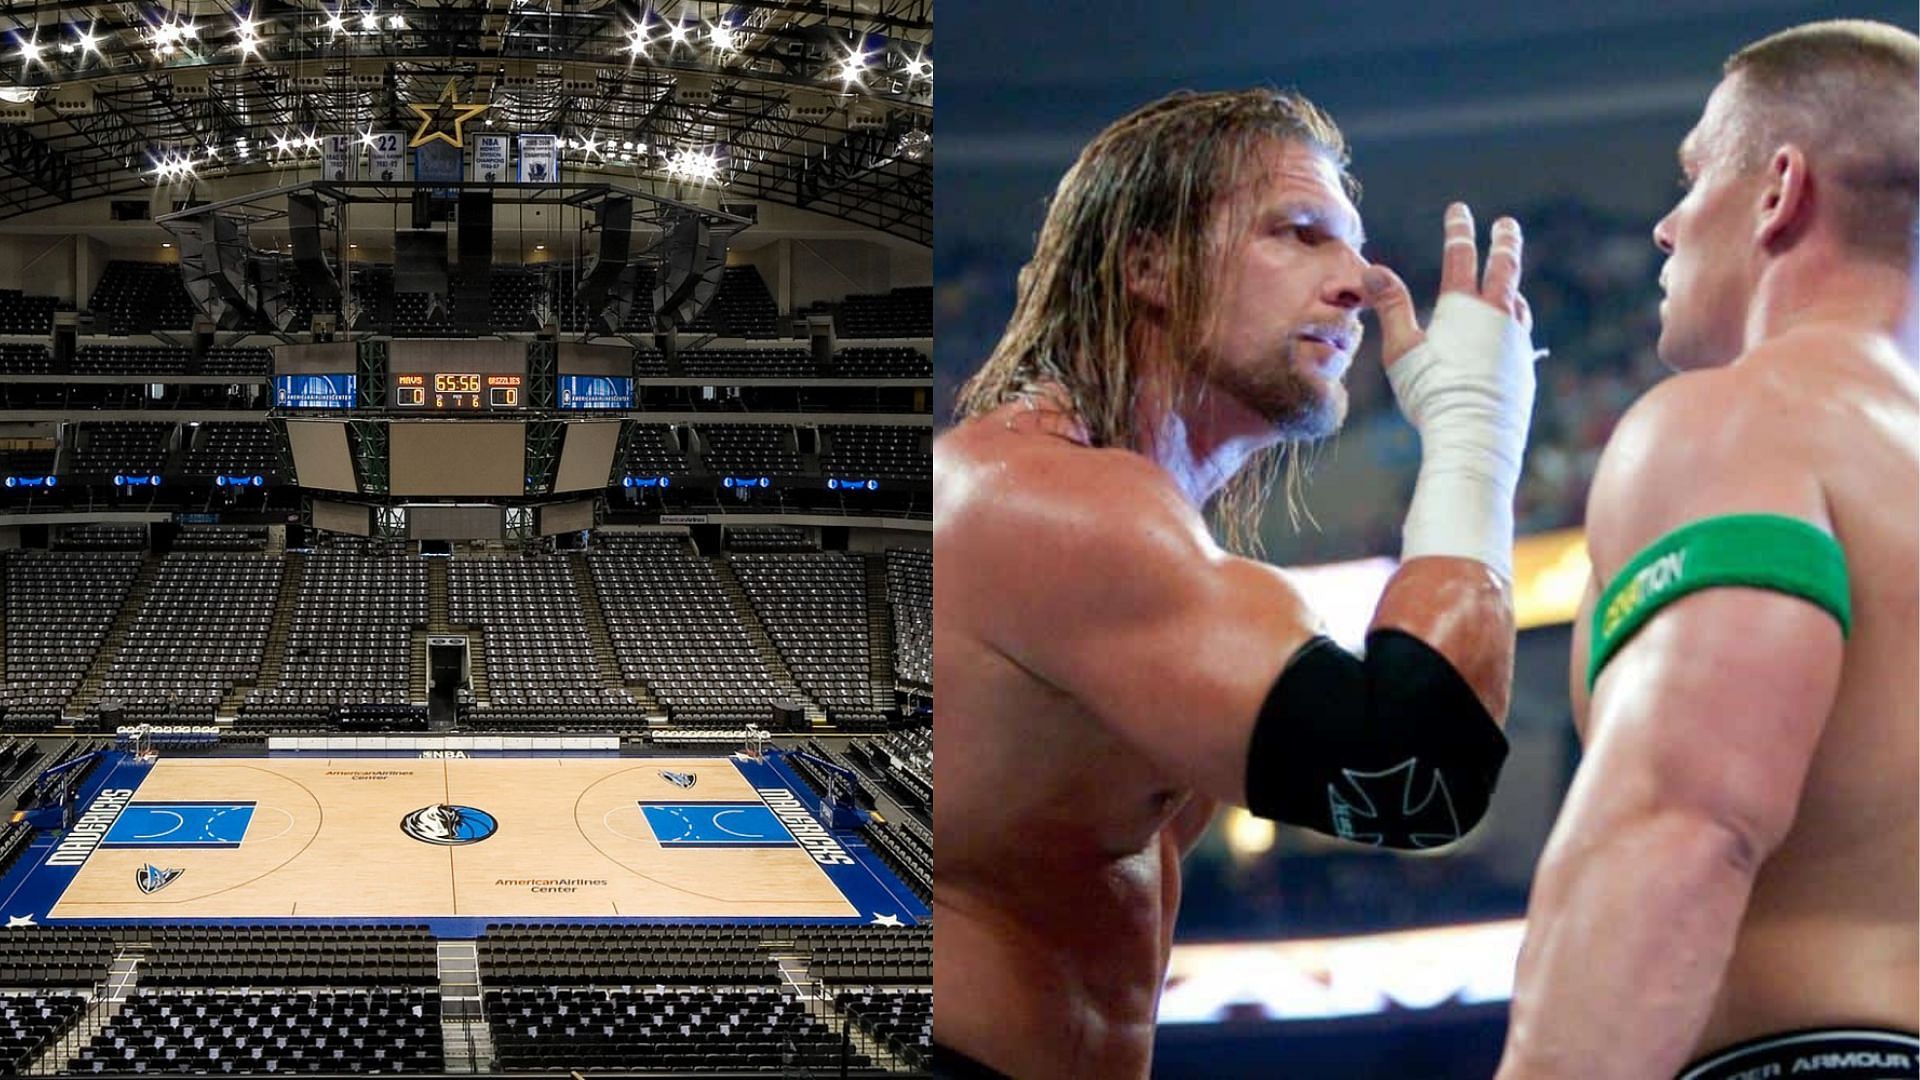 The arena has a vivid history regarding WWE